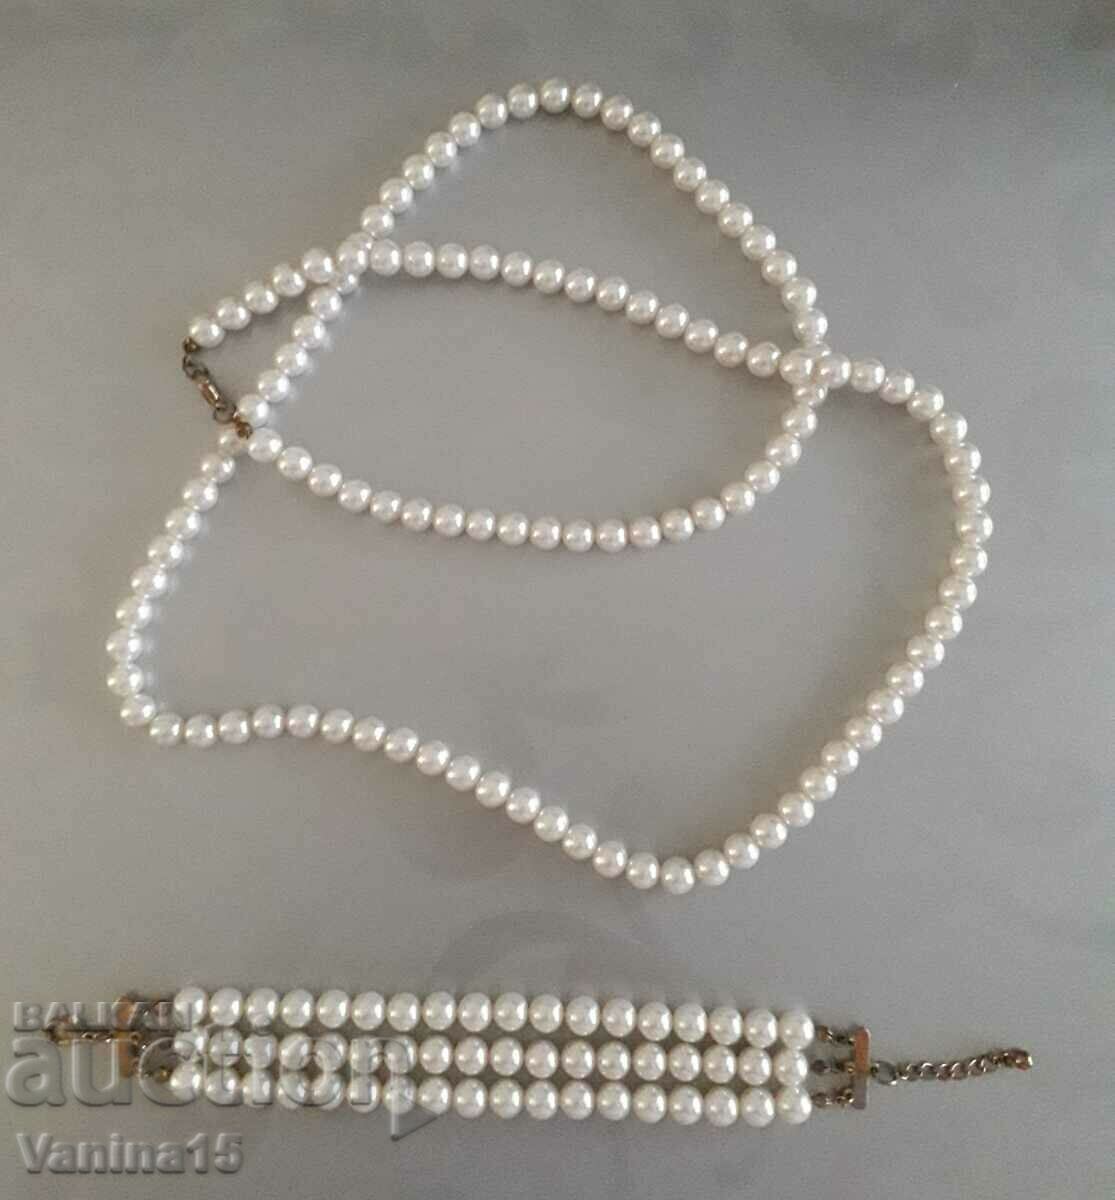 Imitation pearl necklace and bracelet set